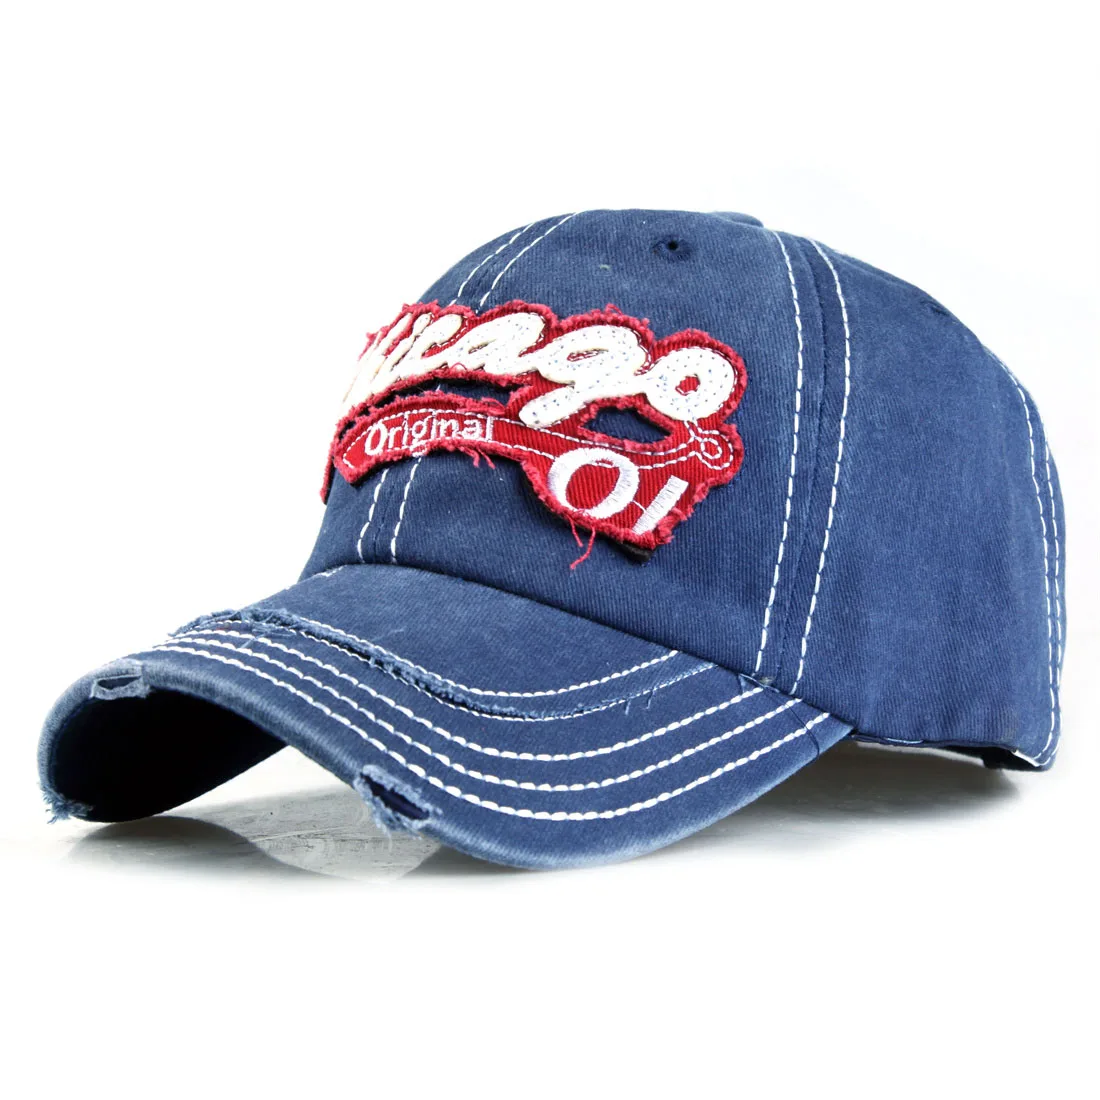 

Xthree New Men's Cap Cotton Baseball Caps for Men Streetwear Spring Dad Hat Snapback Embroidery Casual Cap Casquette Hip Hop Cap